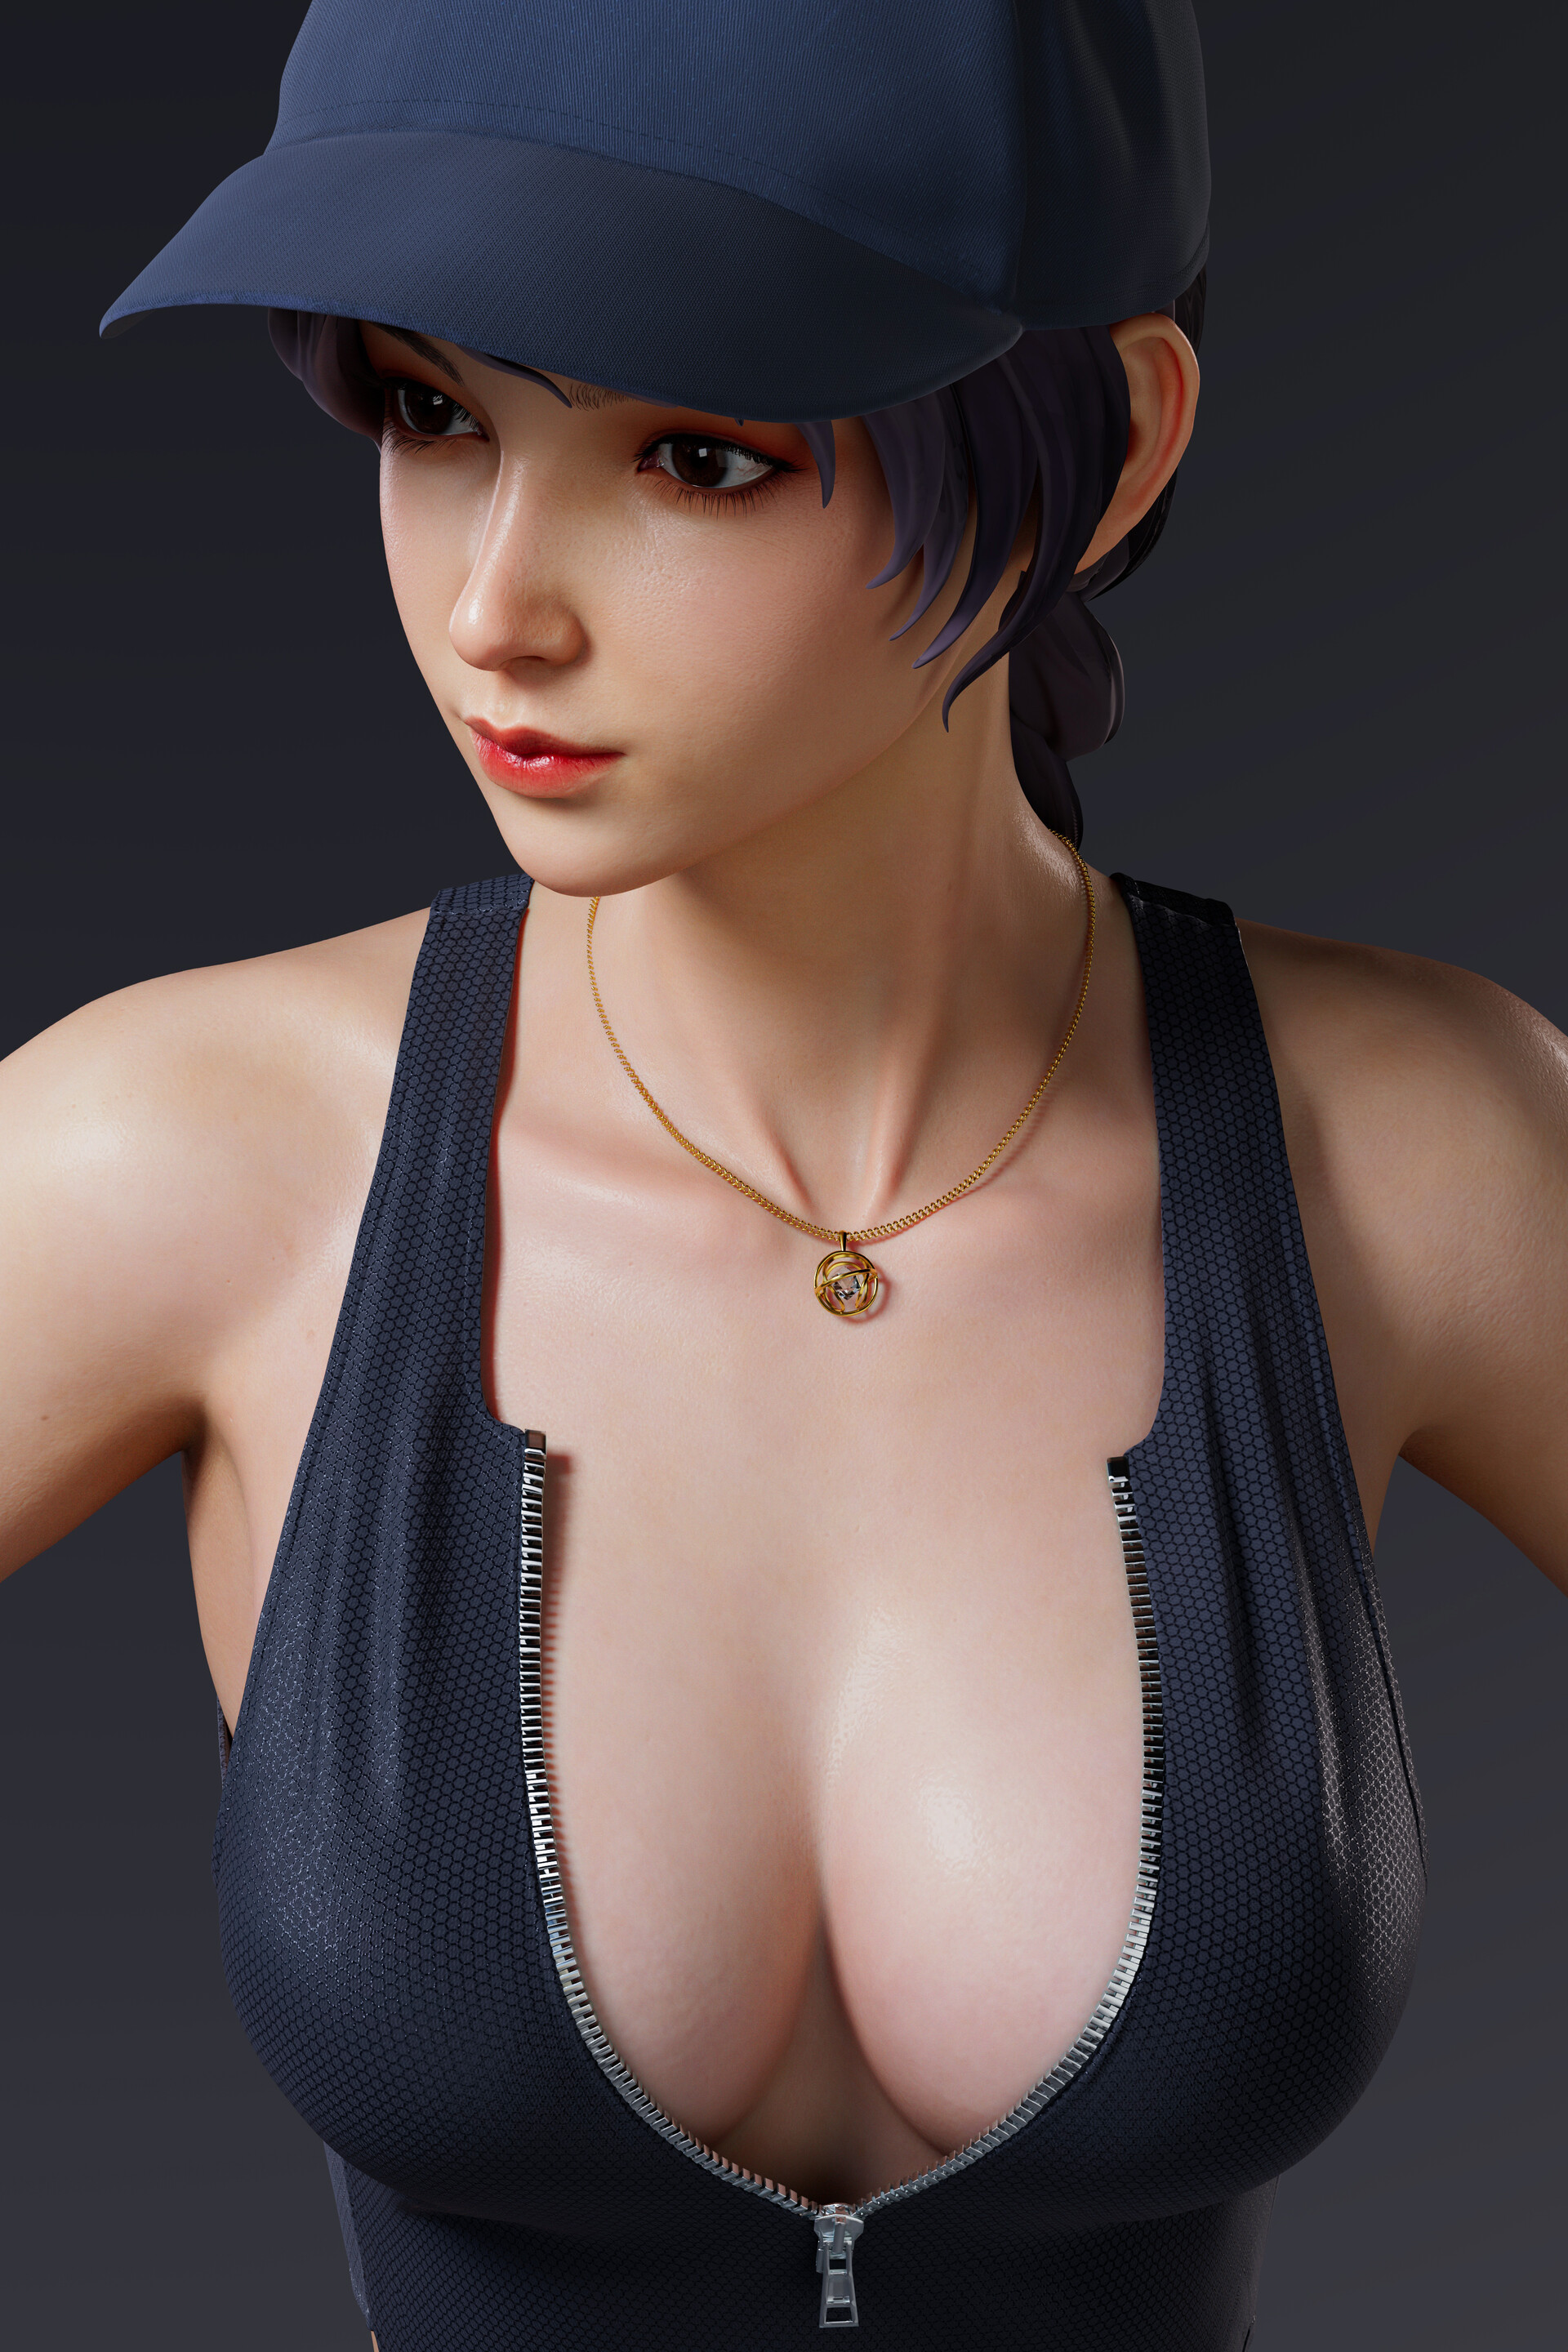 General 1920x2880 Zhang Fuzeng CGI women baseball cap blue hair cleavage zipper simple background portrait display hat no bra necklace